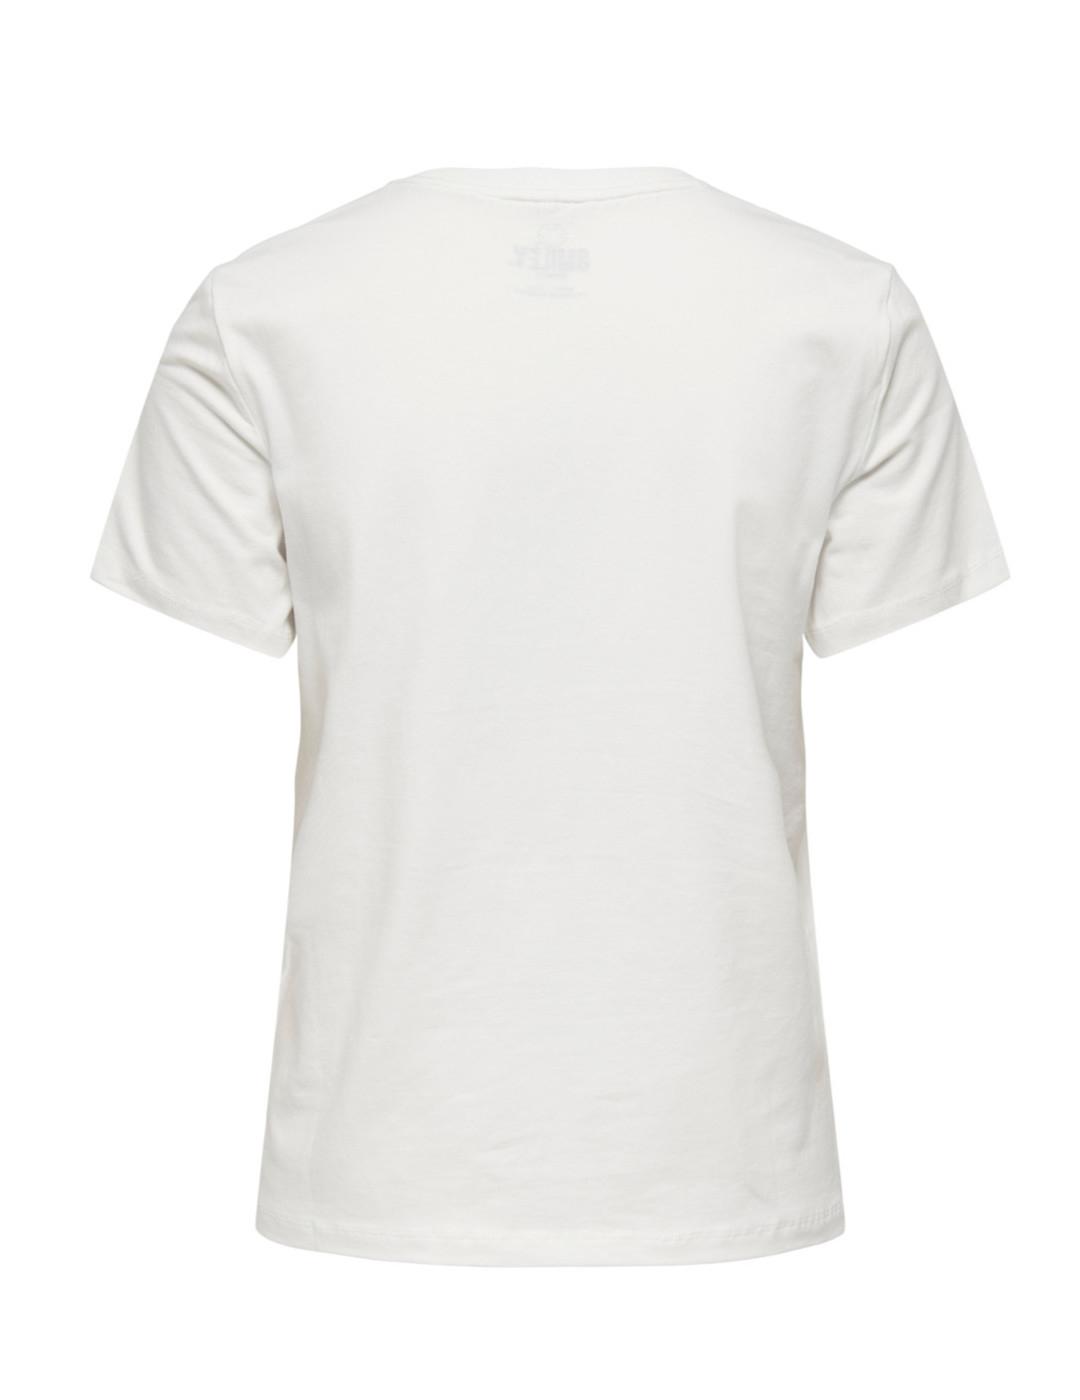 Camiseta Only Smiley blanca de manga corta para mujer